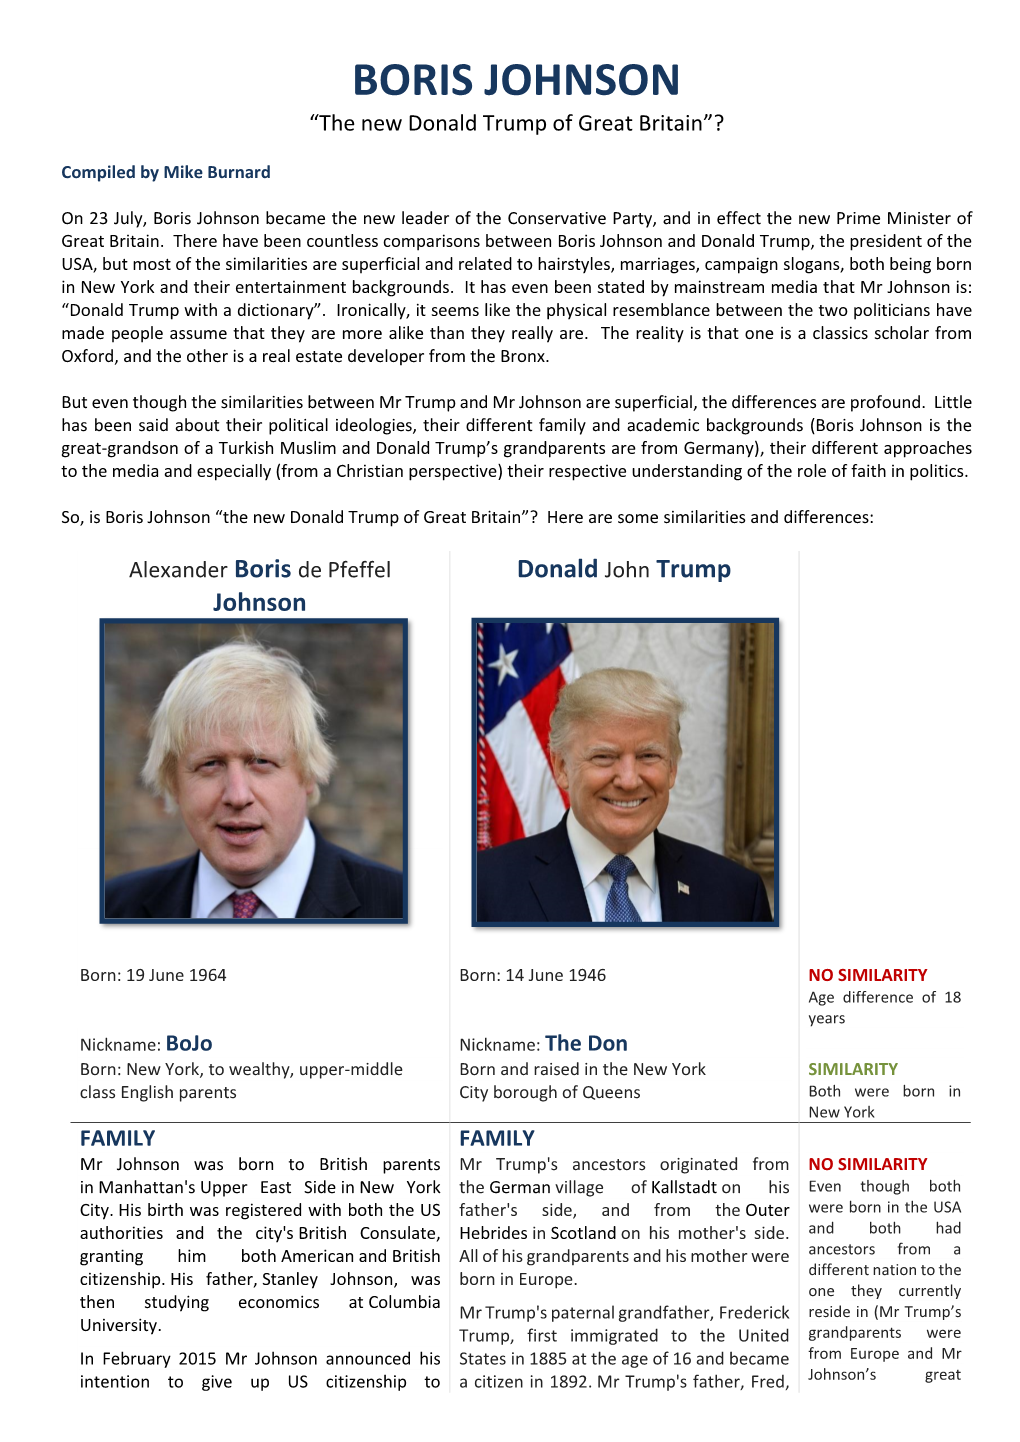 BORIS JOHNSON “The New Donald Trump of Great Britain”?